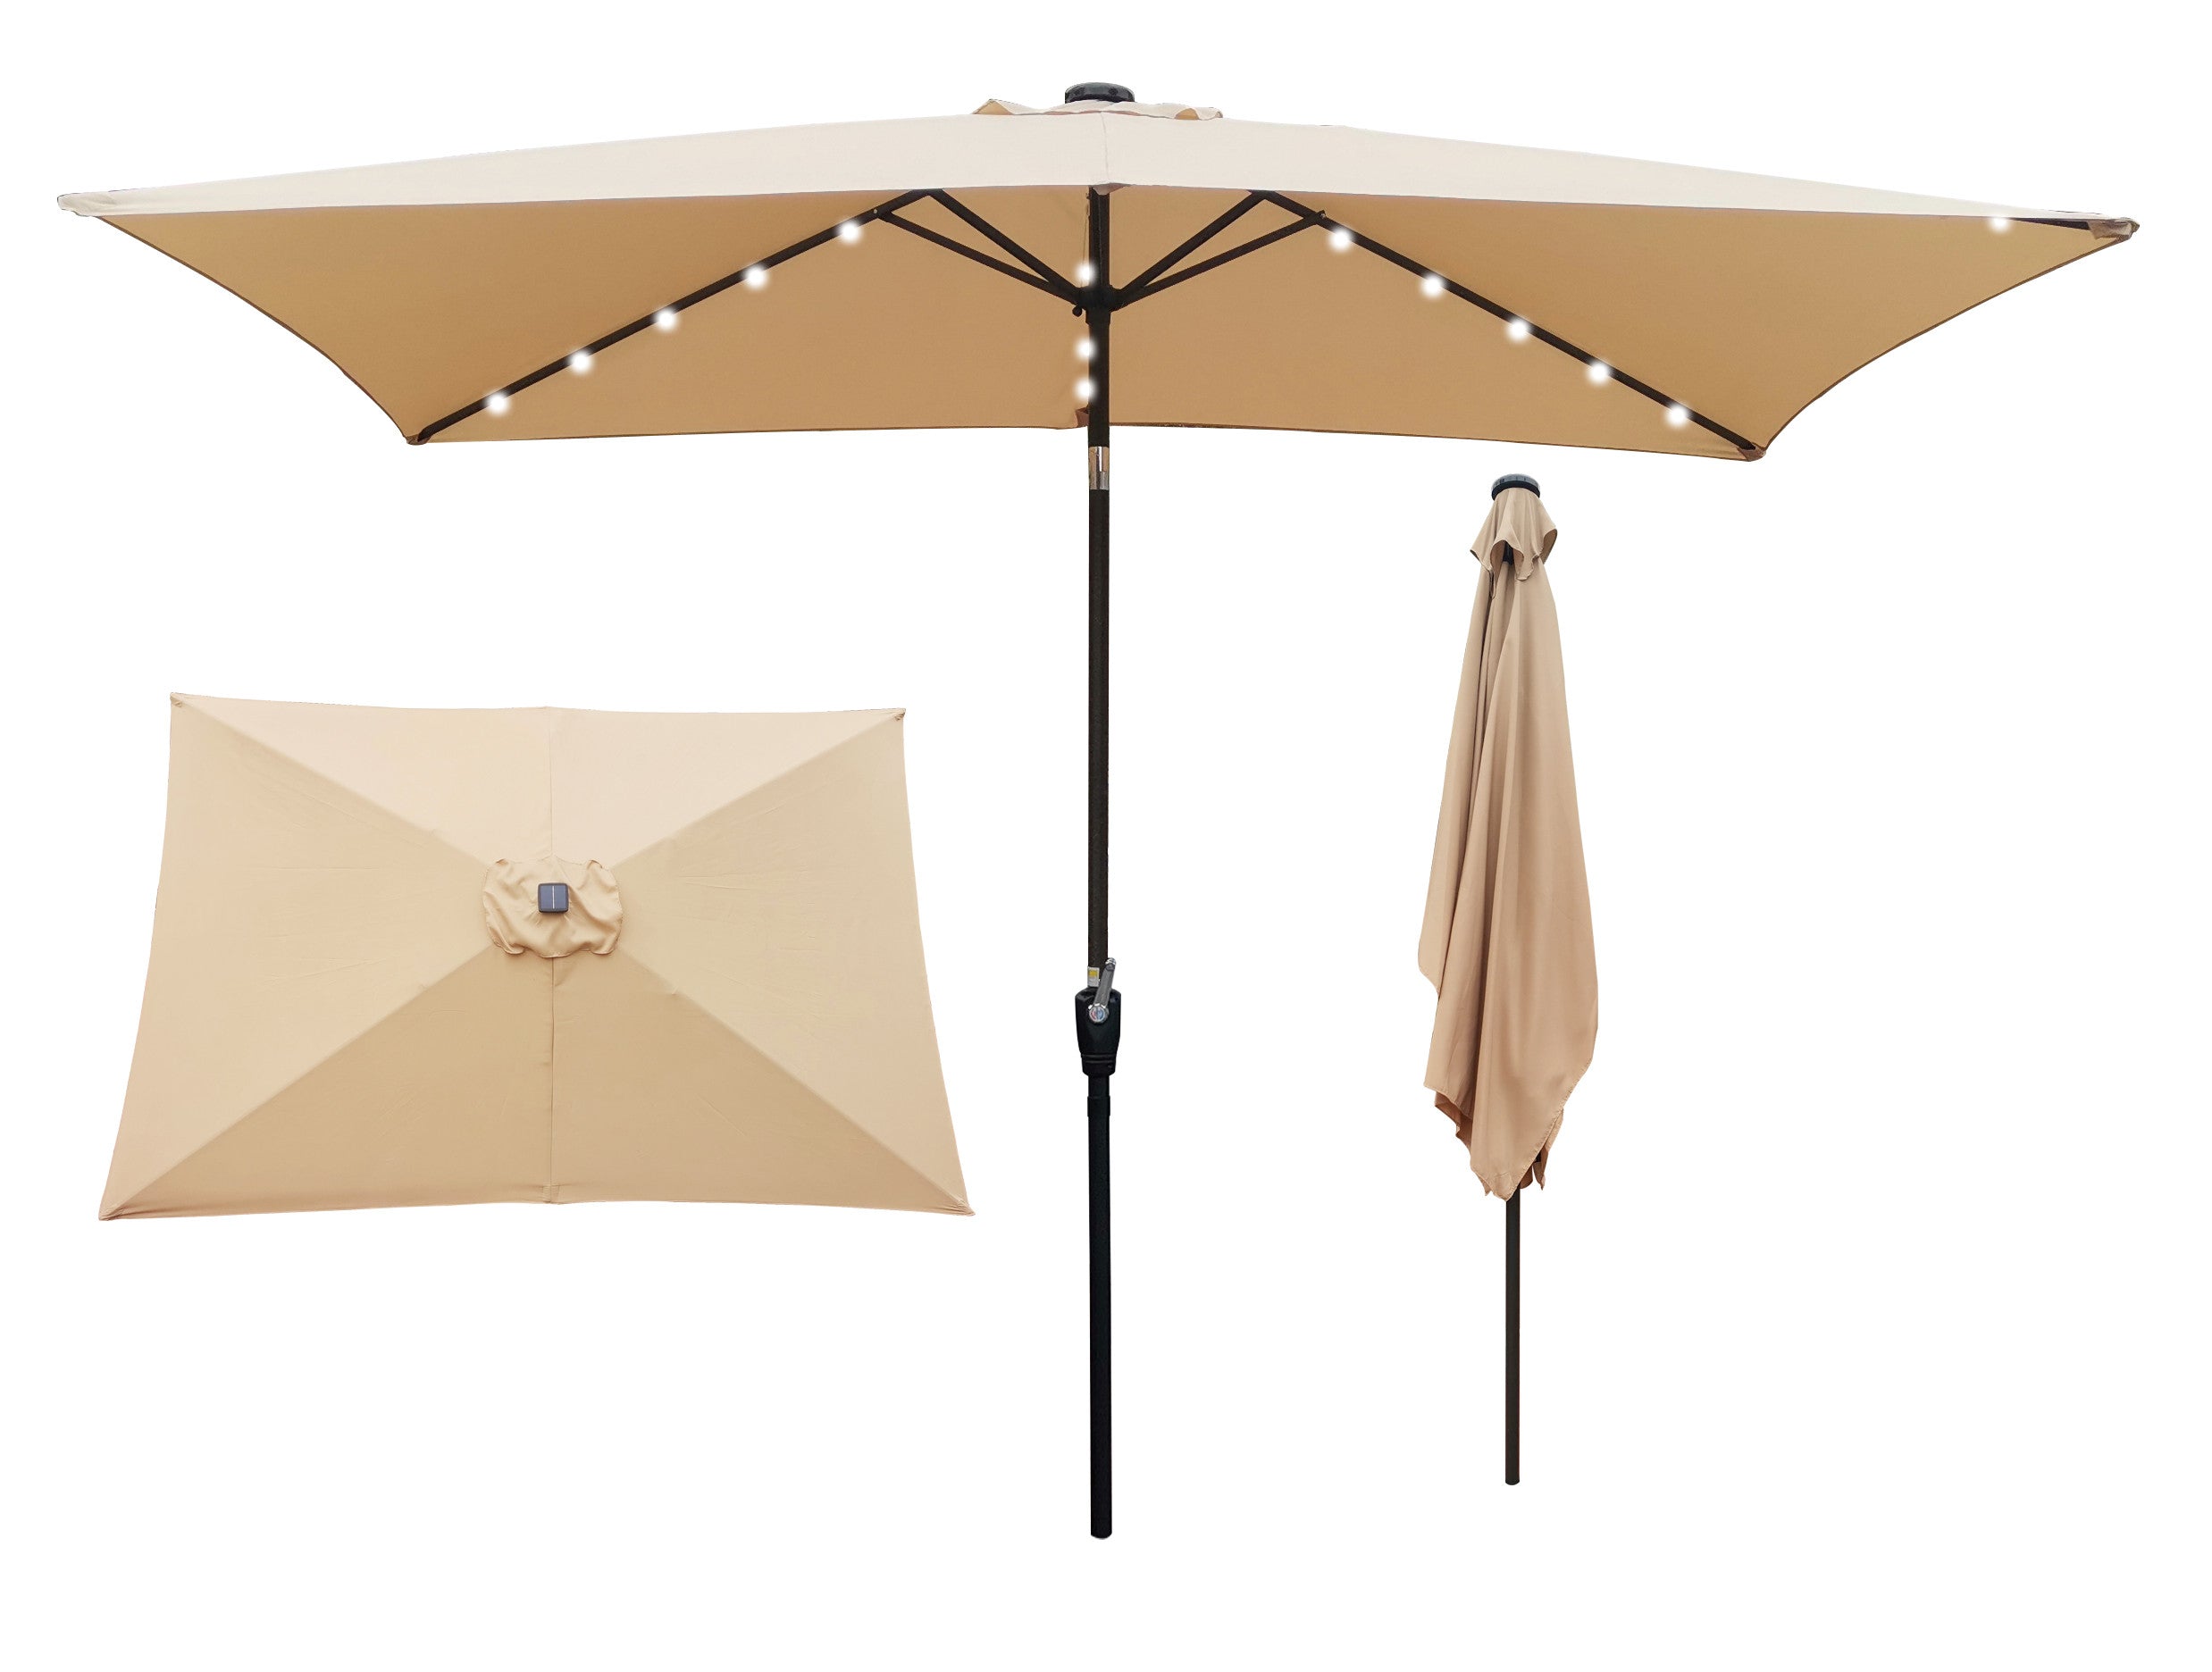 [KGORGE Plus] 10ft x 6.5ft Solar LED Lighting Rectangular Outdoor Umbrella for Garden Backyard Pool